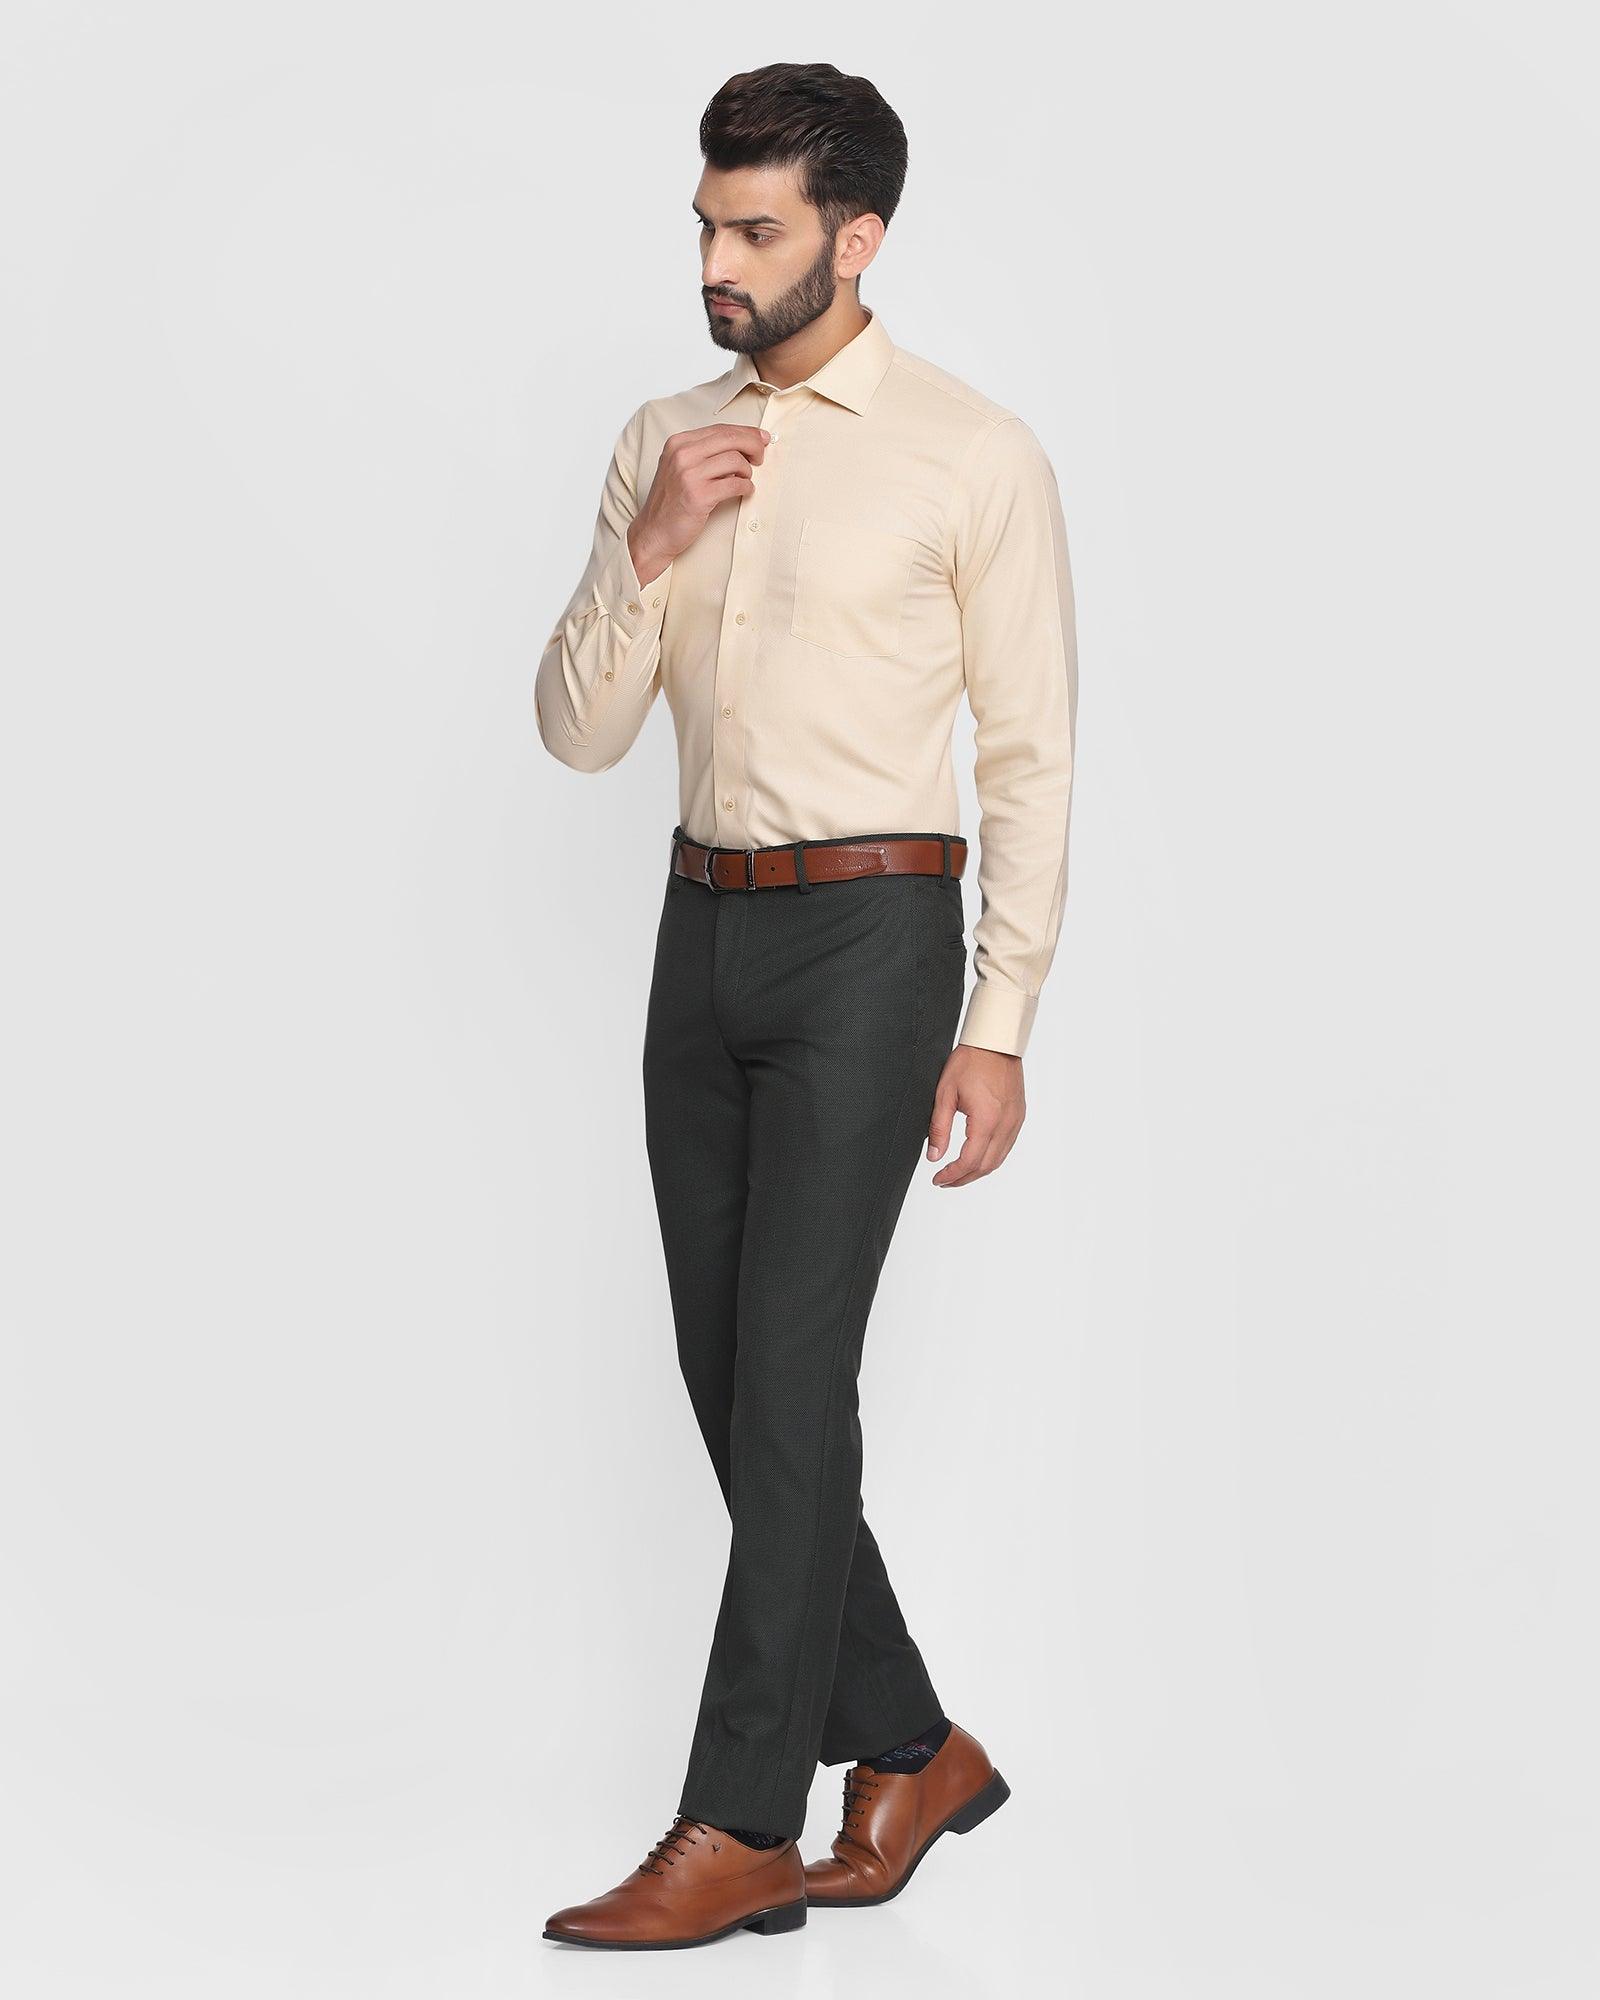 Bit Maroon Color Trousers | New Arrivals | Shop Now – Italian Crown